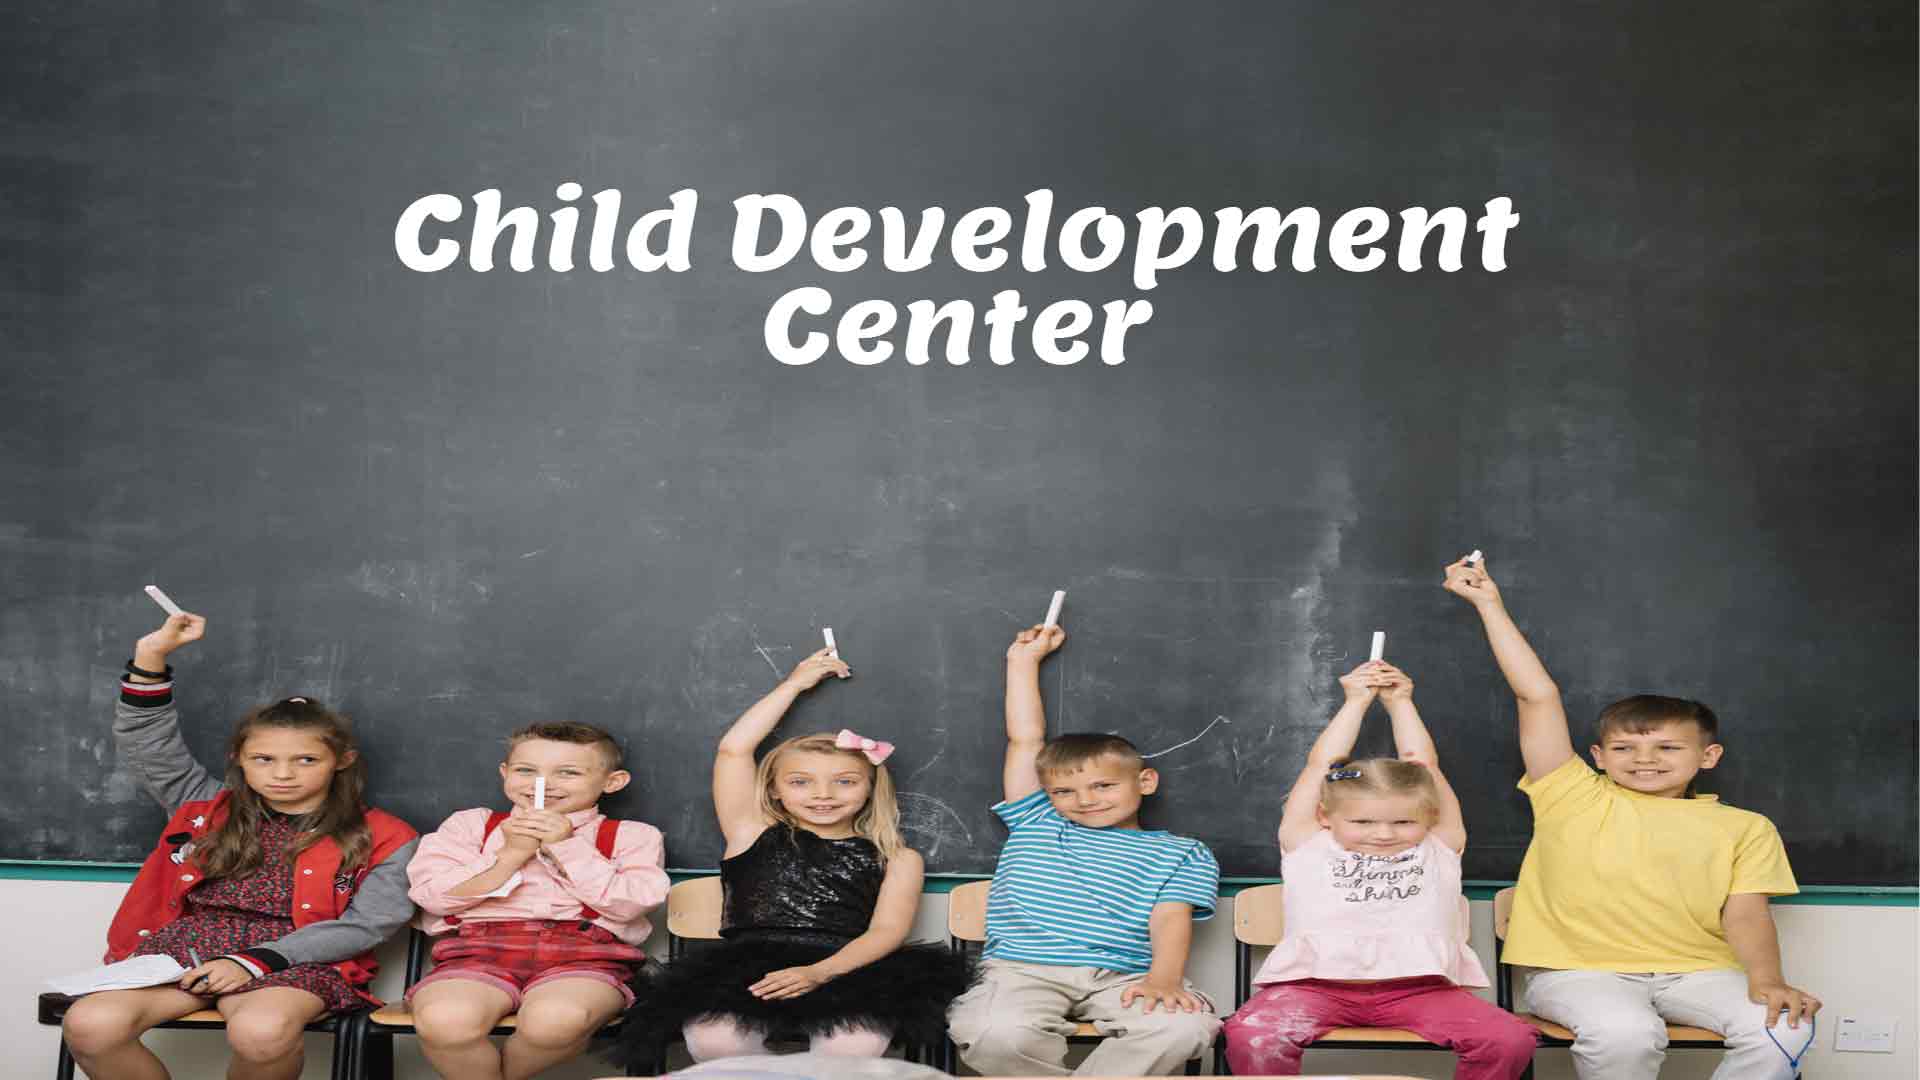 child developent center in nagpur,child developent service,child developent training in nagpur